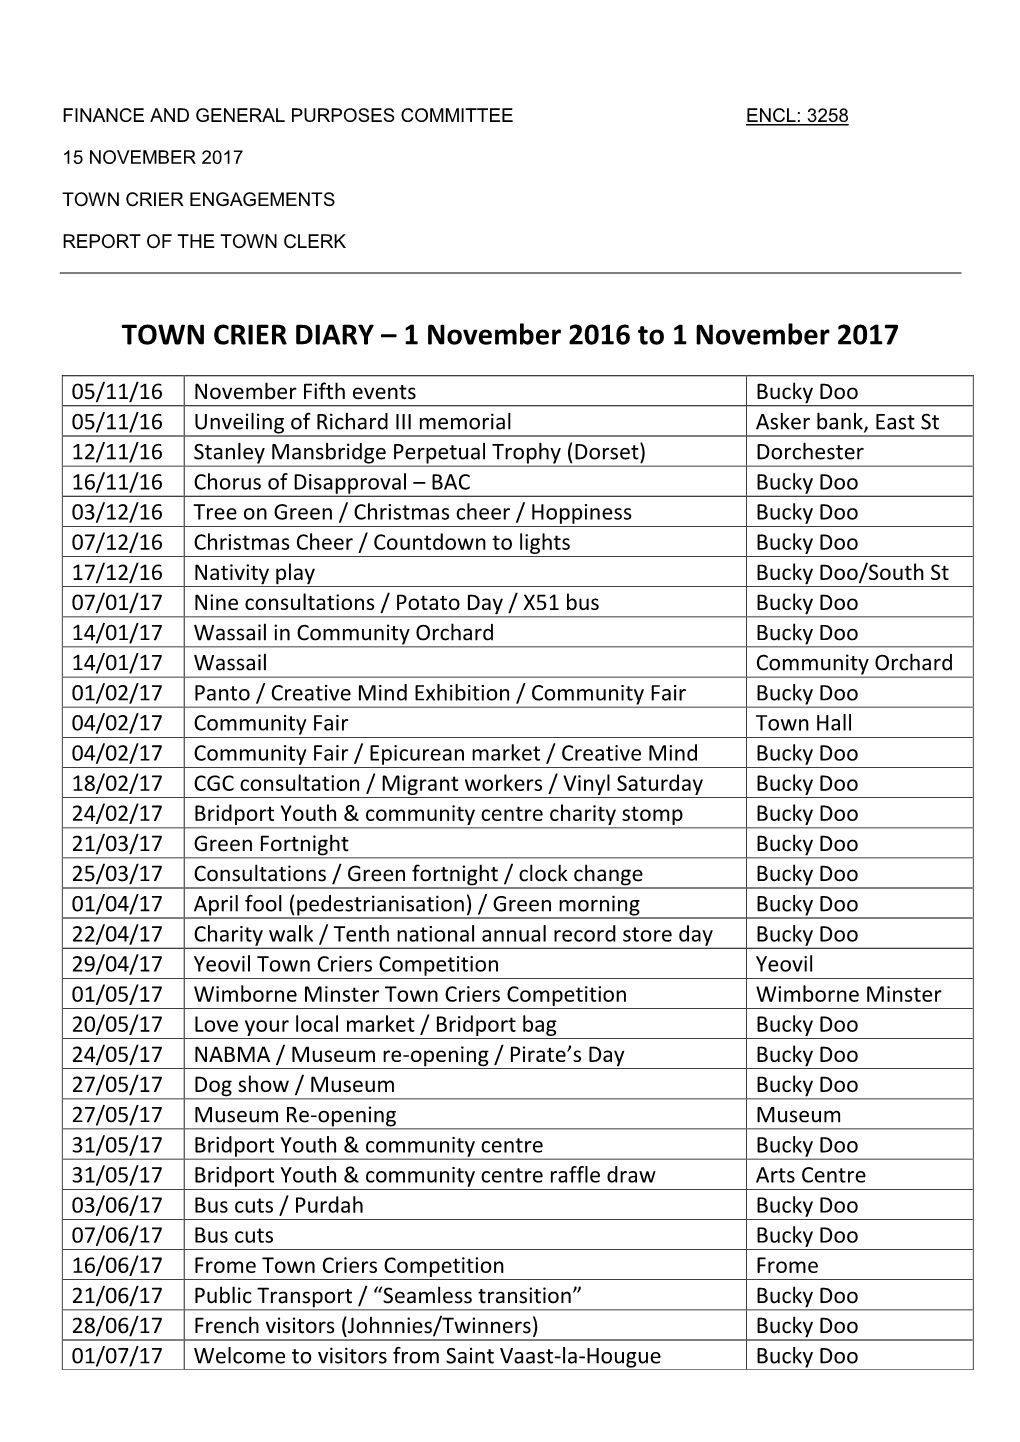 TOWN CRIER DIARY – 1 November 2016 to 1 November 2017